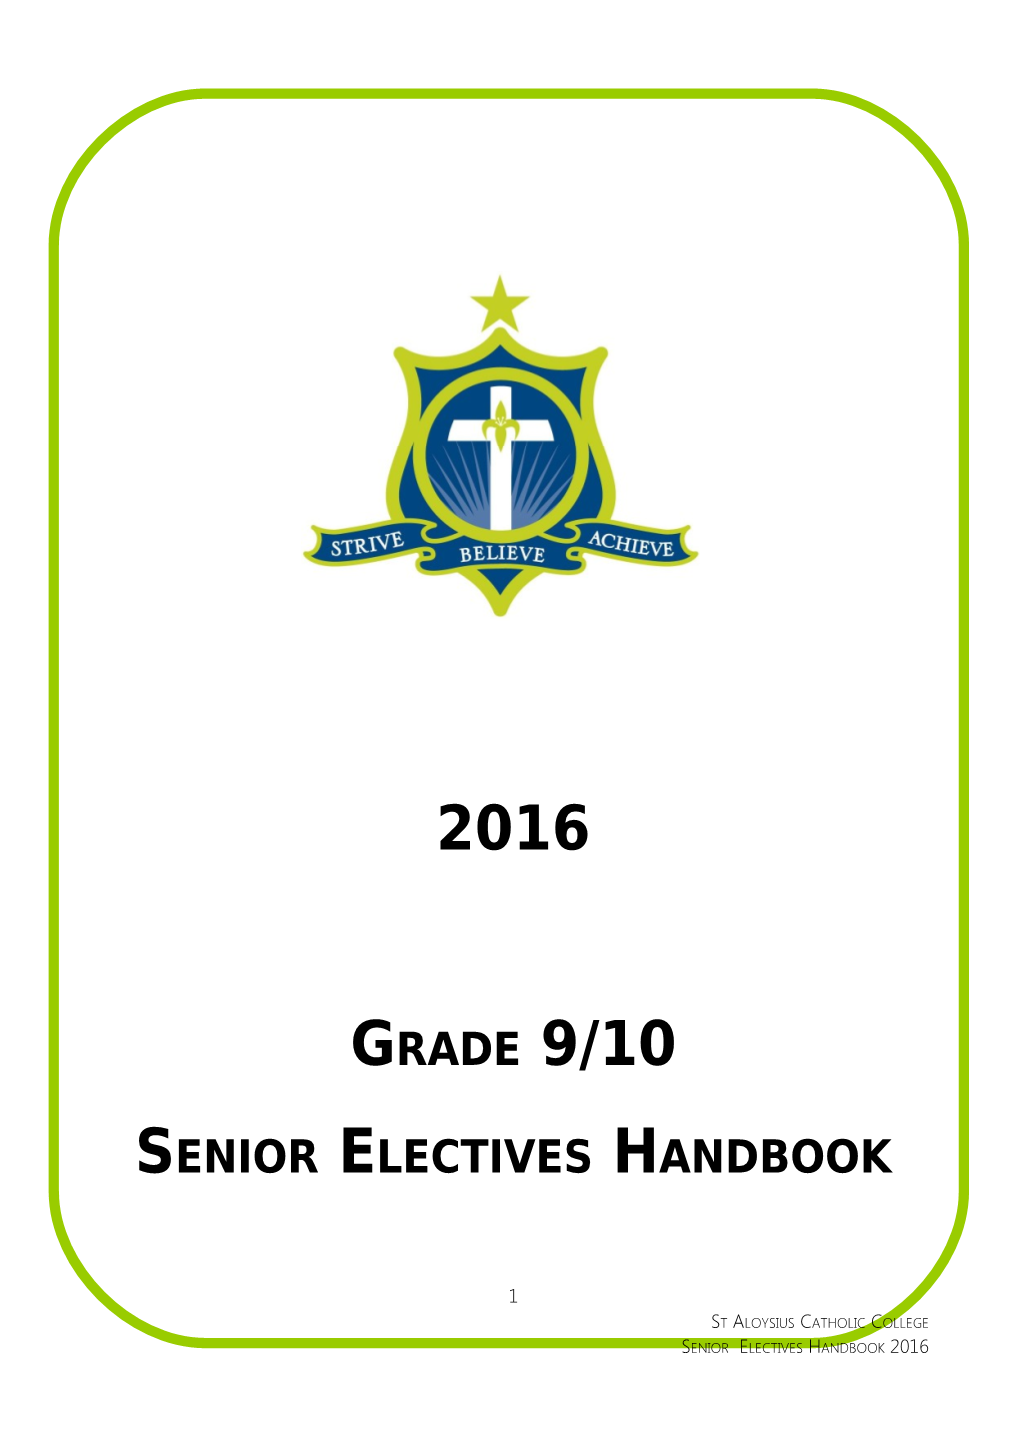 Senior Electives Handbook